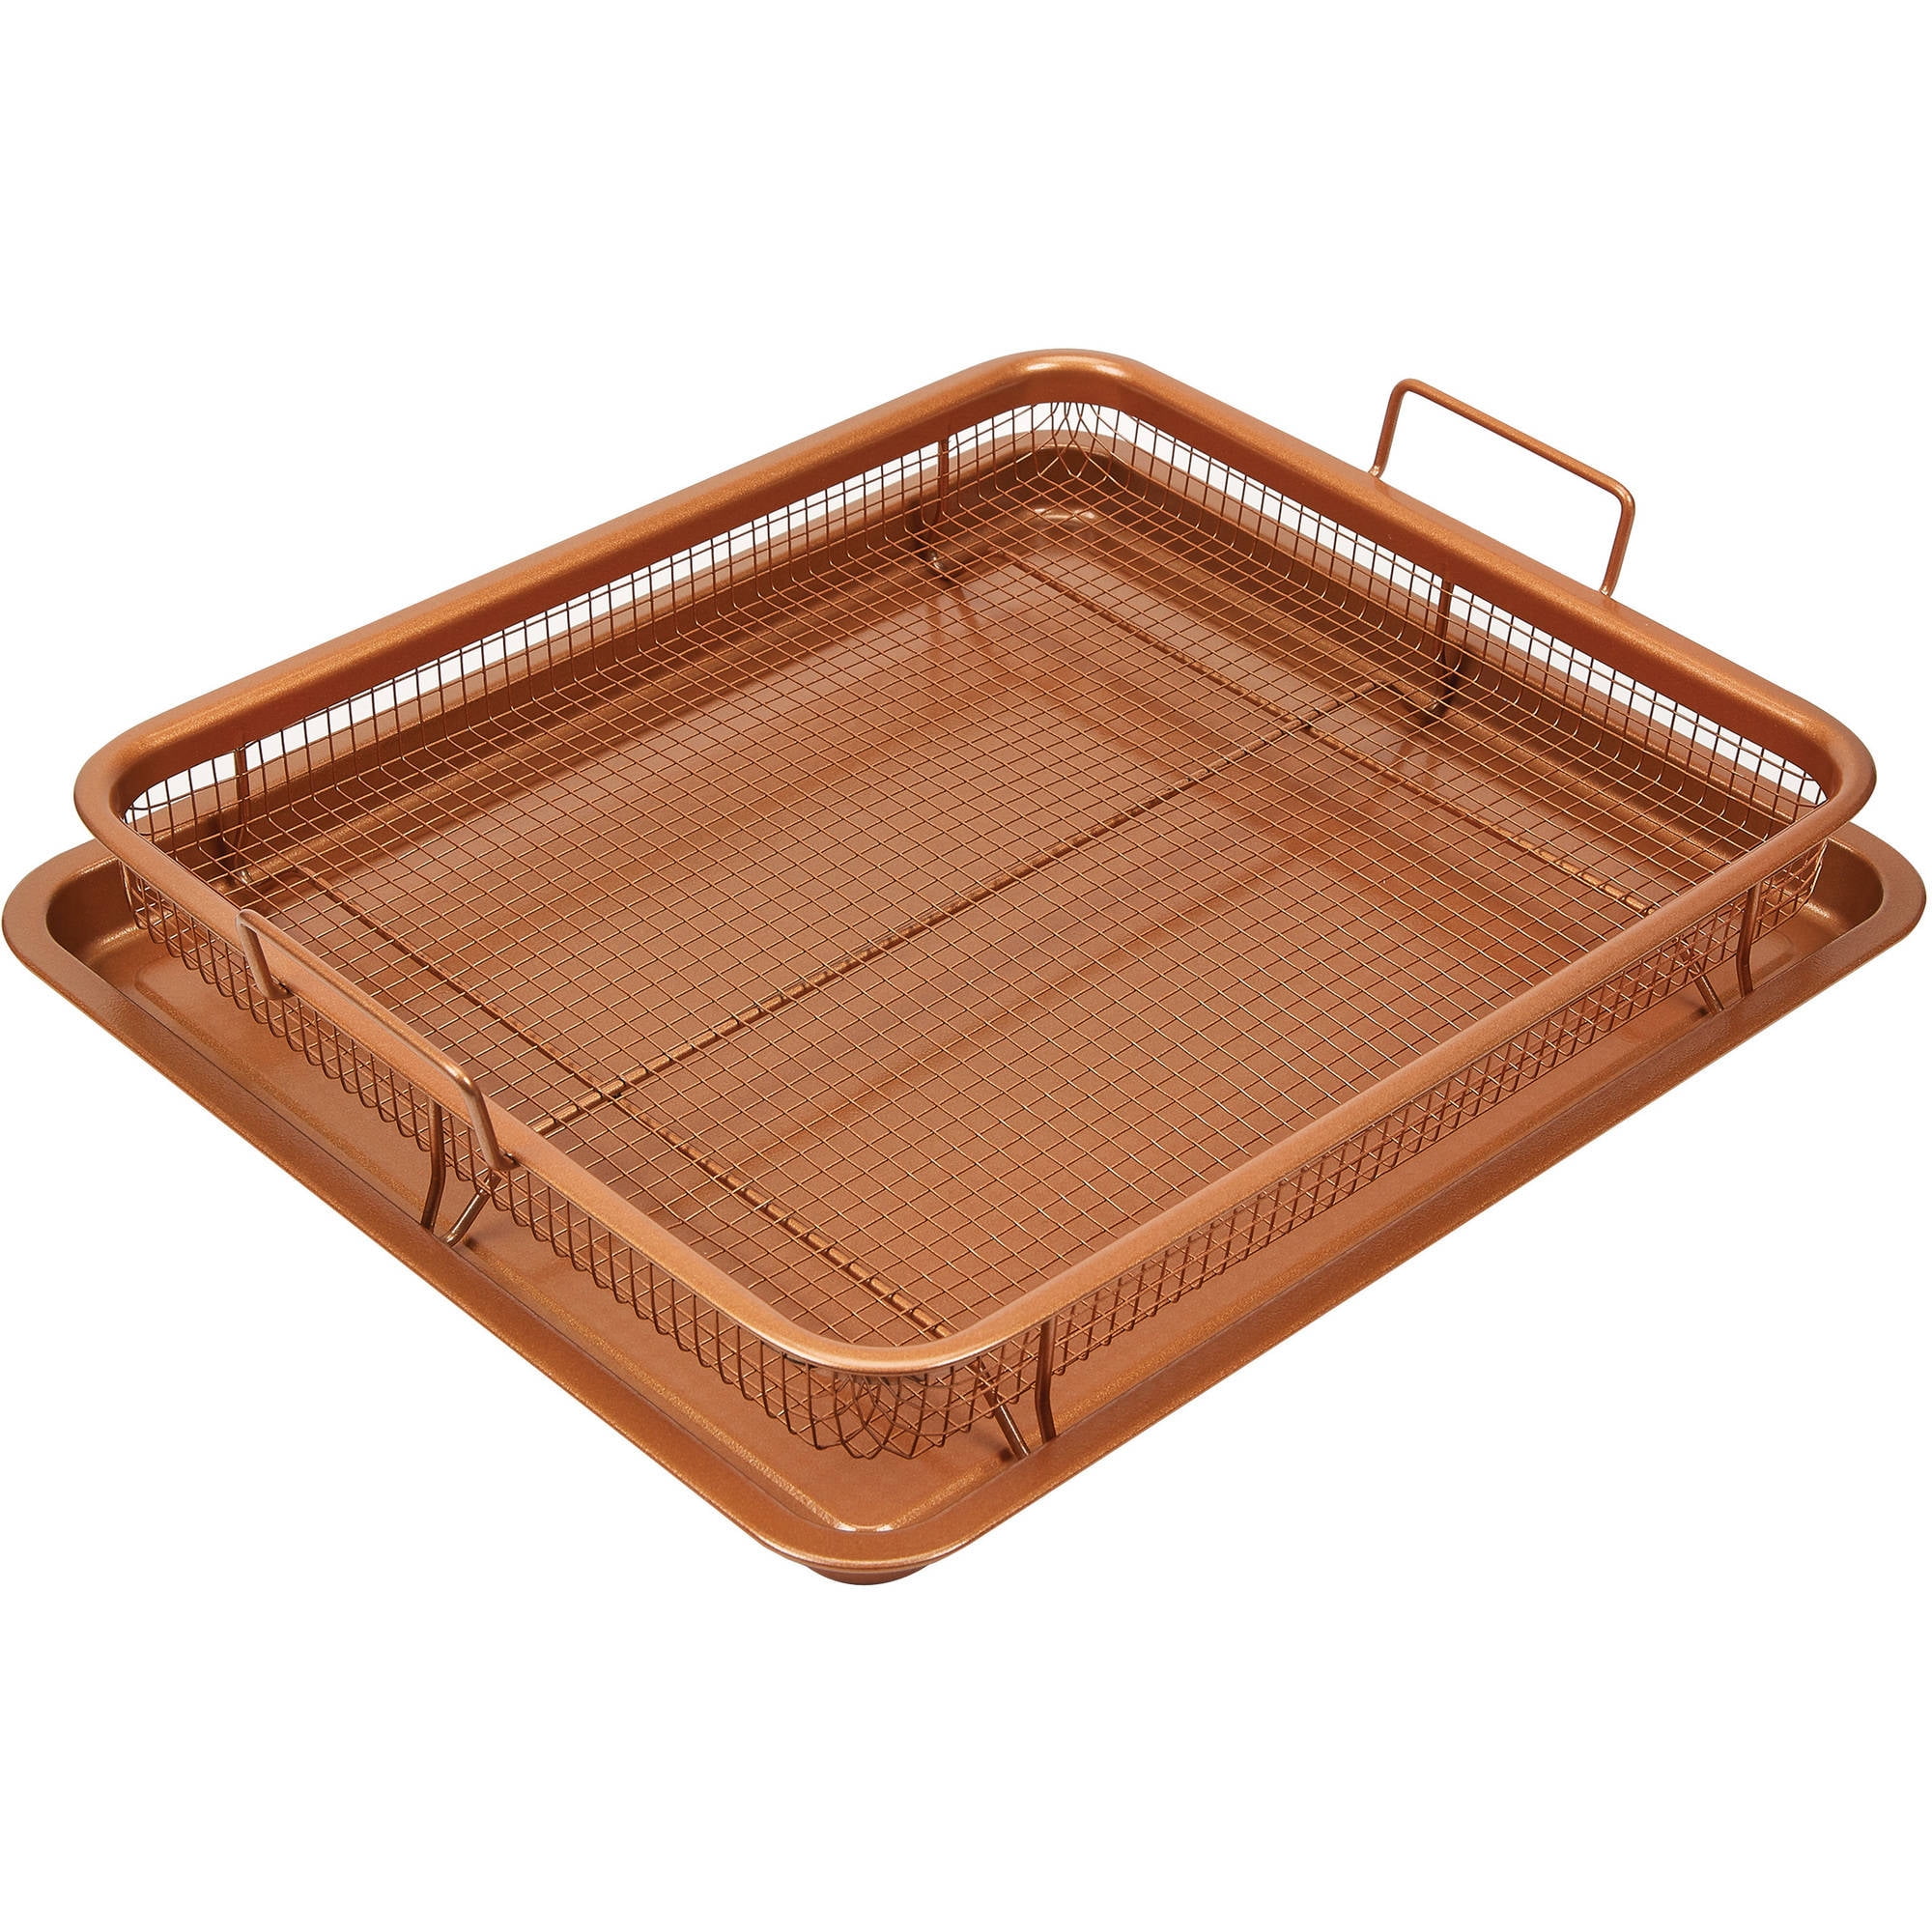 Rectangular Copper Crisper Tray, 2-Piece Set – Chef Pomodoro